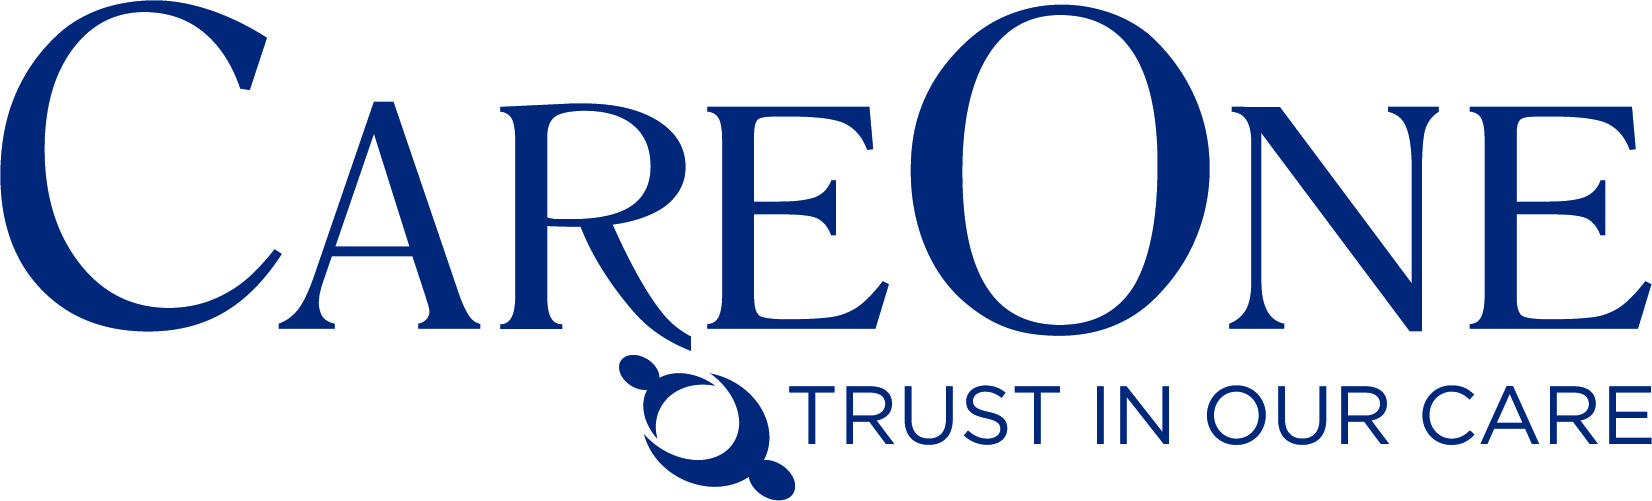 CareOne Corporate logo_Blue_4c.jpg